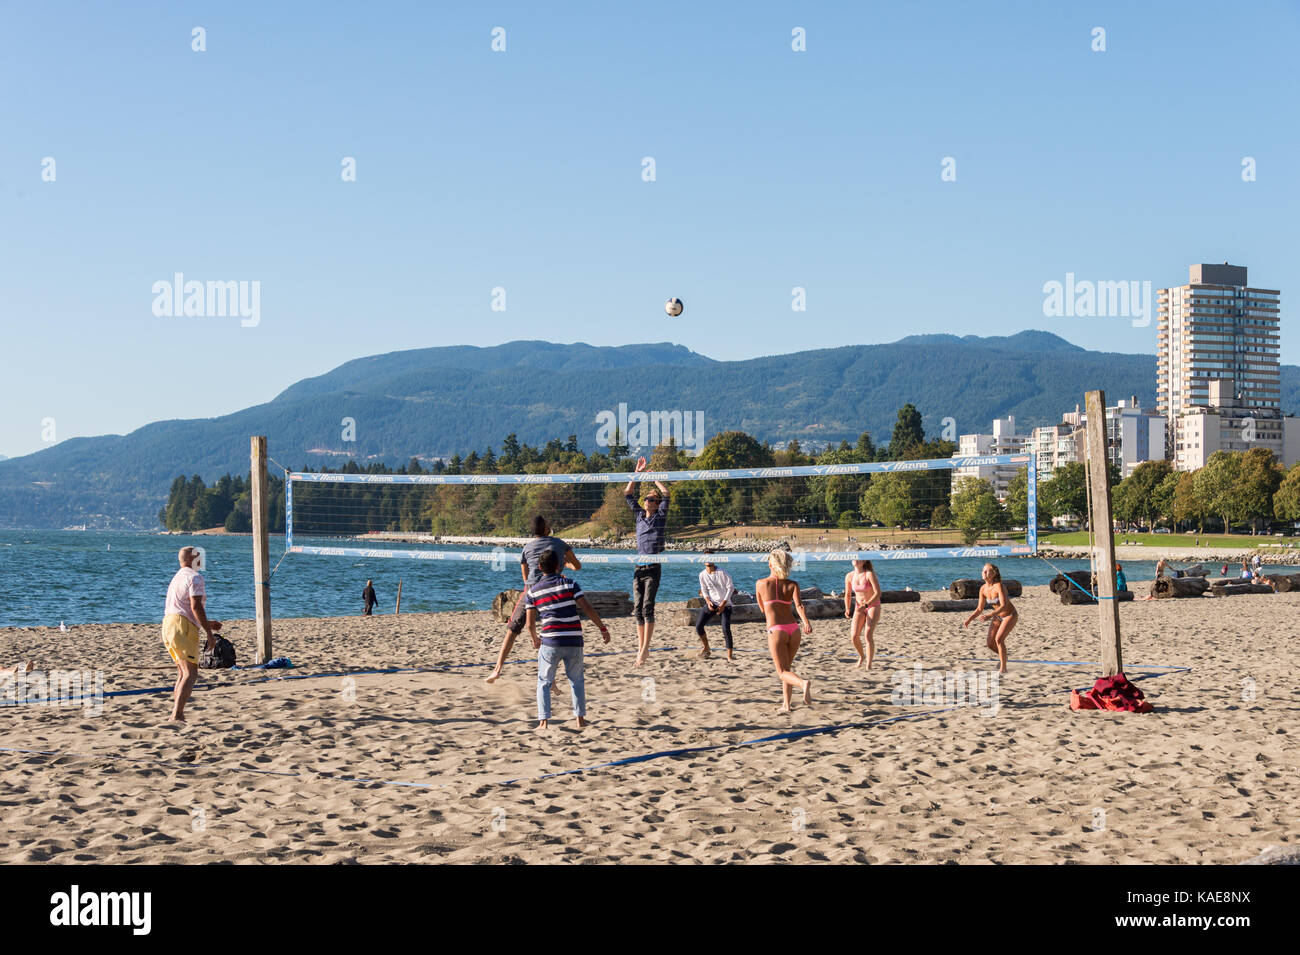 Menschen spielen Beachvolleyball am Vancouver English Bay Beach im Sommer. Vancouver, British Columbia, Kanada - 14 September 2017. Stockfoto